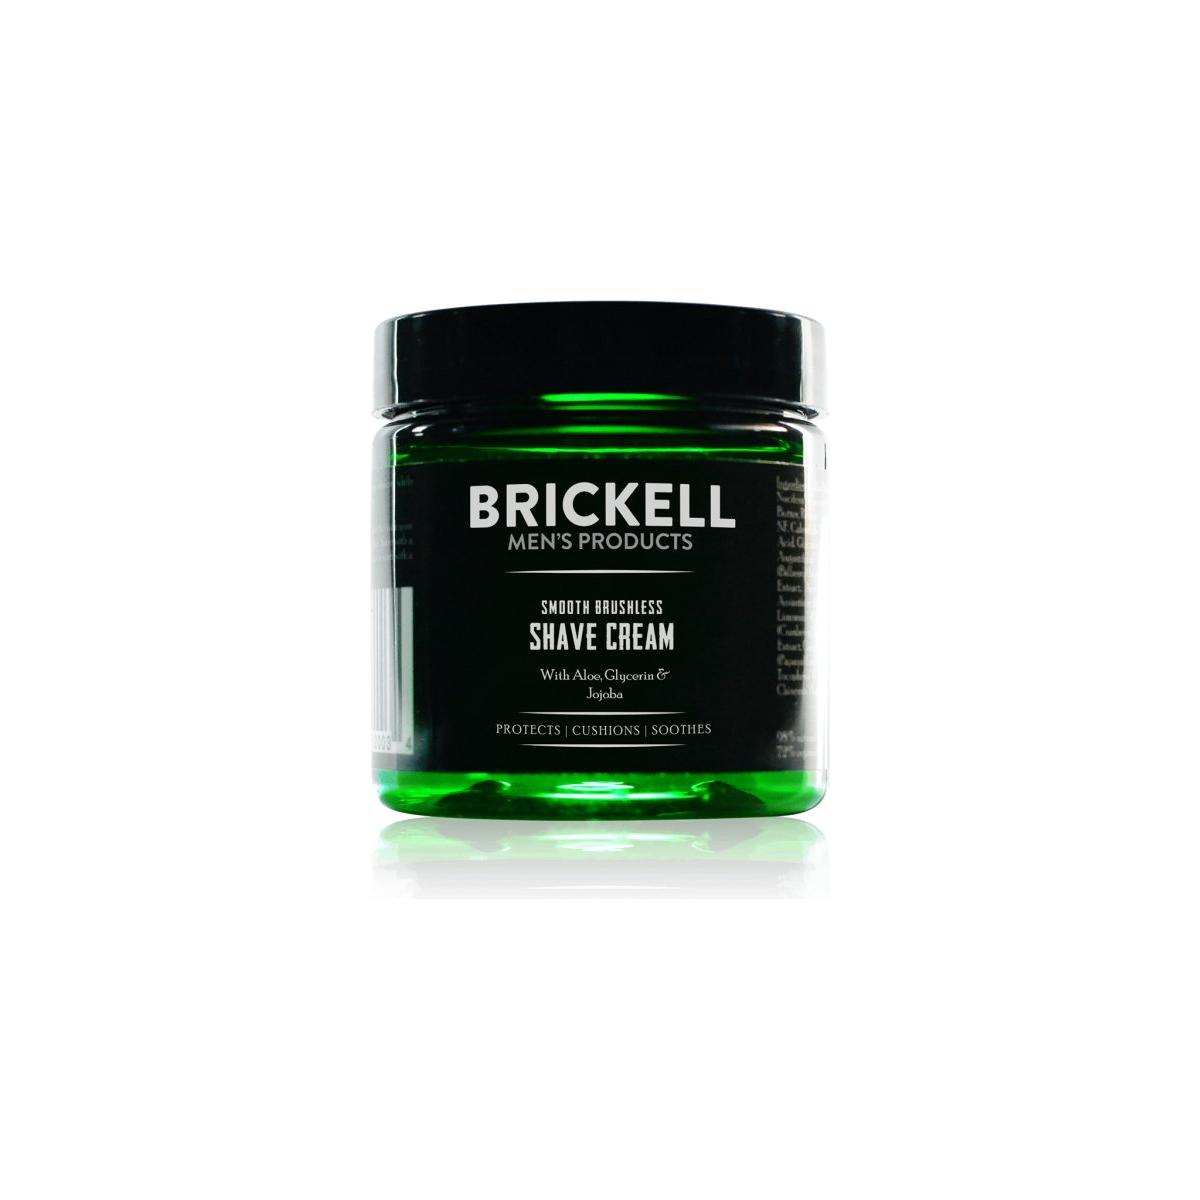 Brickell Smooth Brushless Shave Cream - 148ml - Glam Global UK